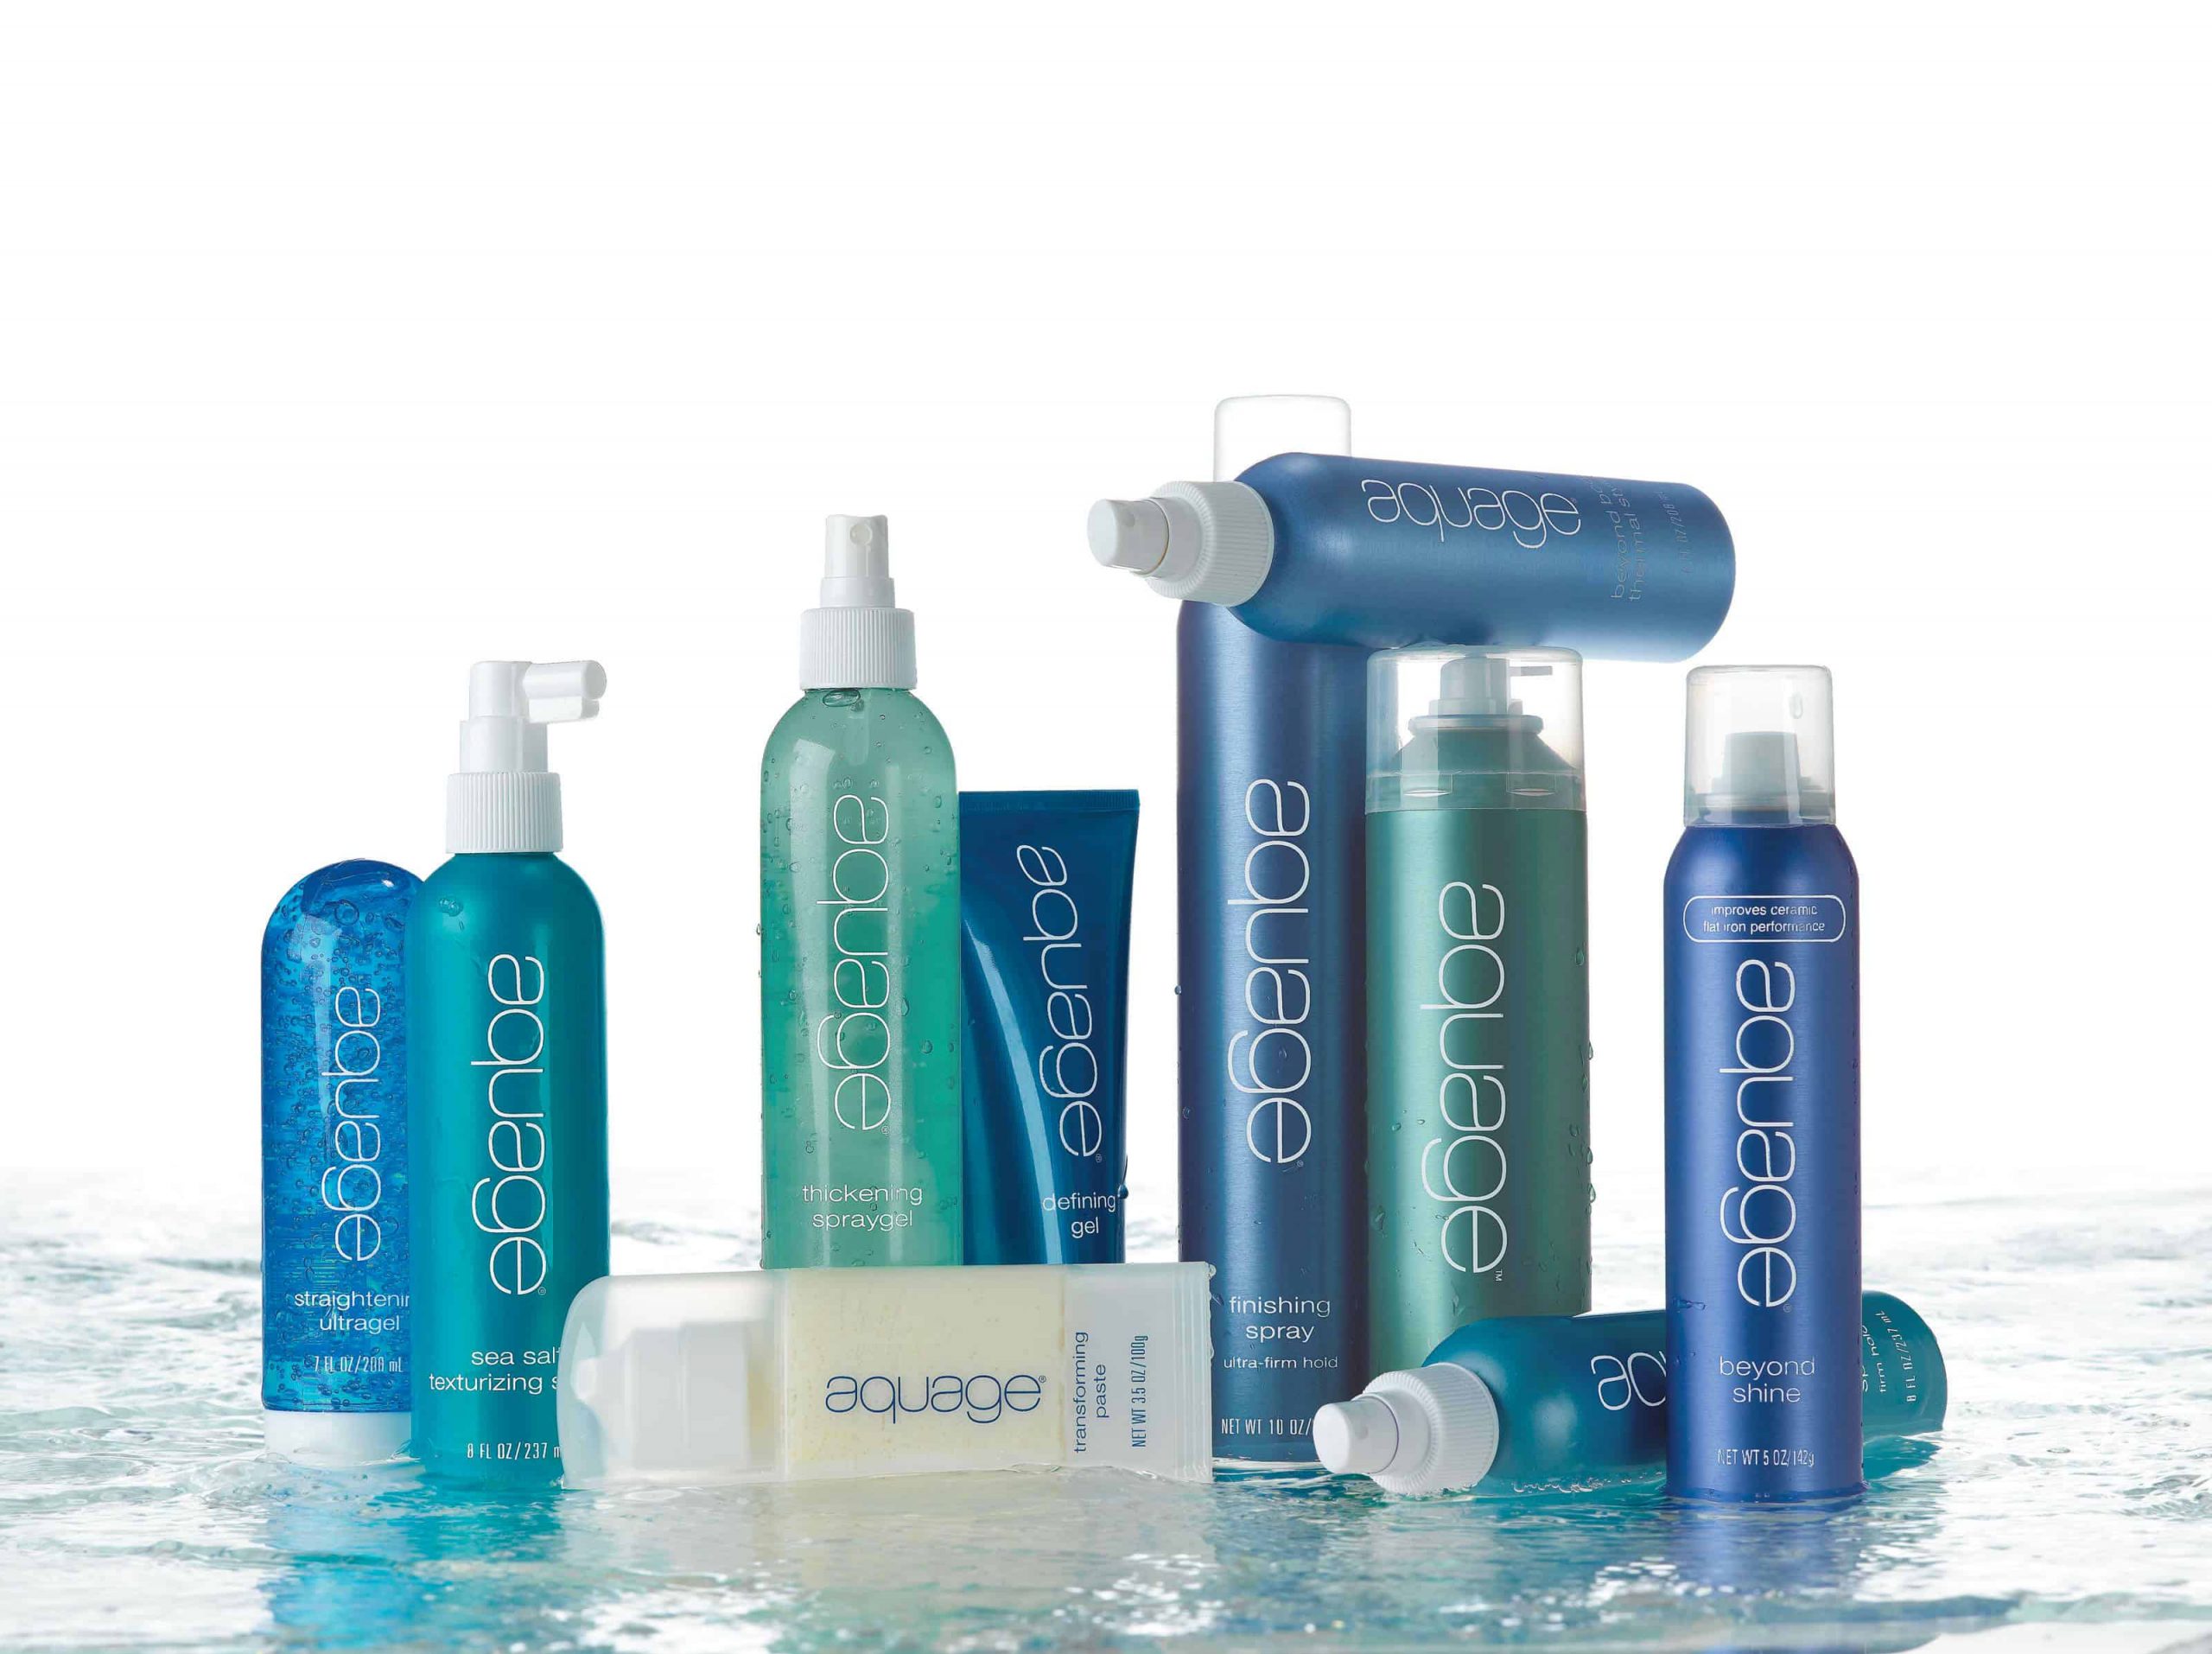 Aquage products